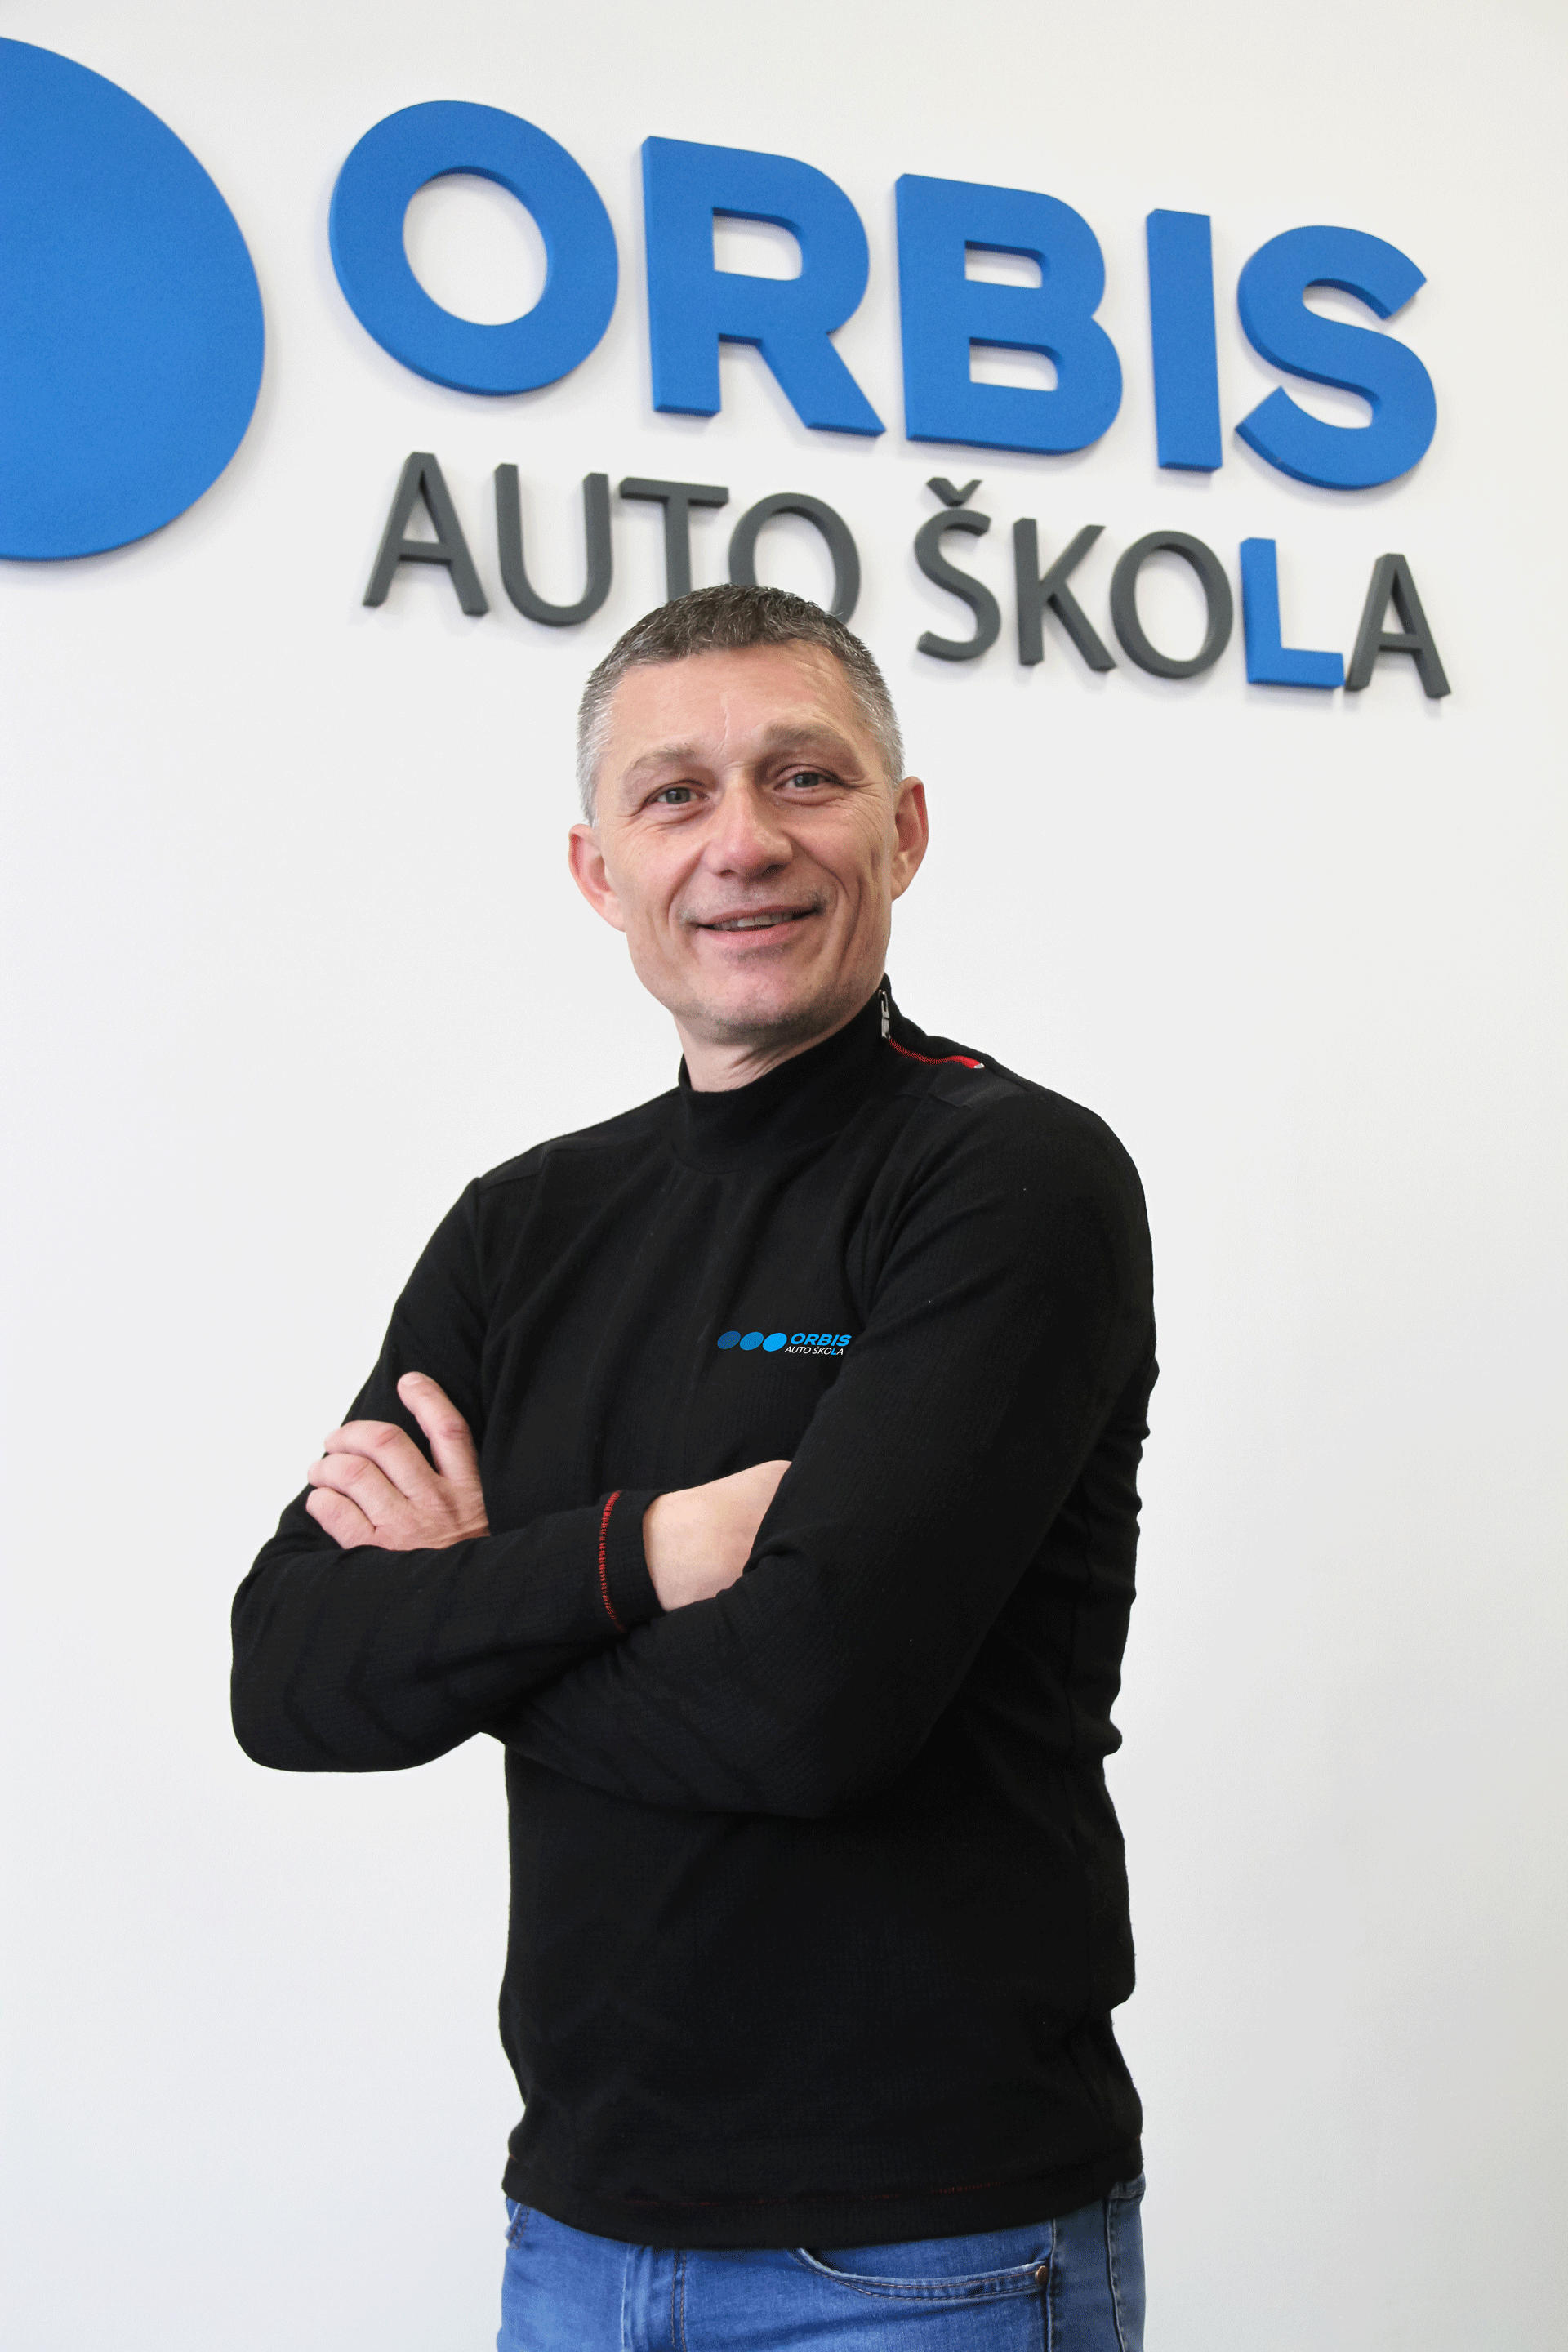 Auto skola Orbis instruktor voznje Aleksandar Petrović